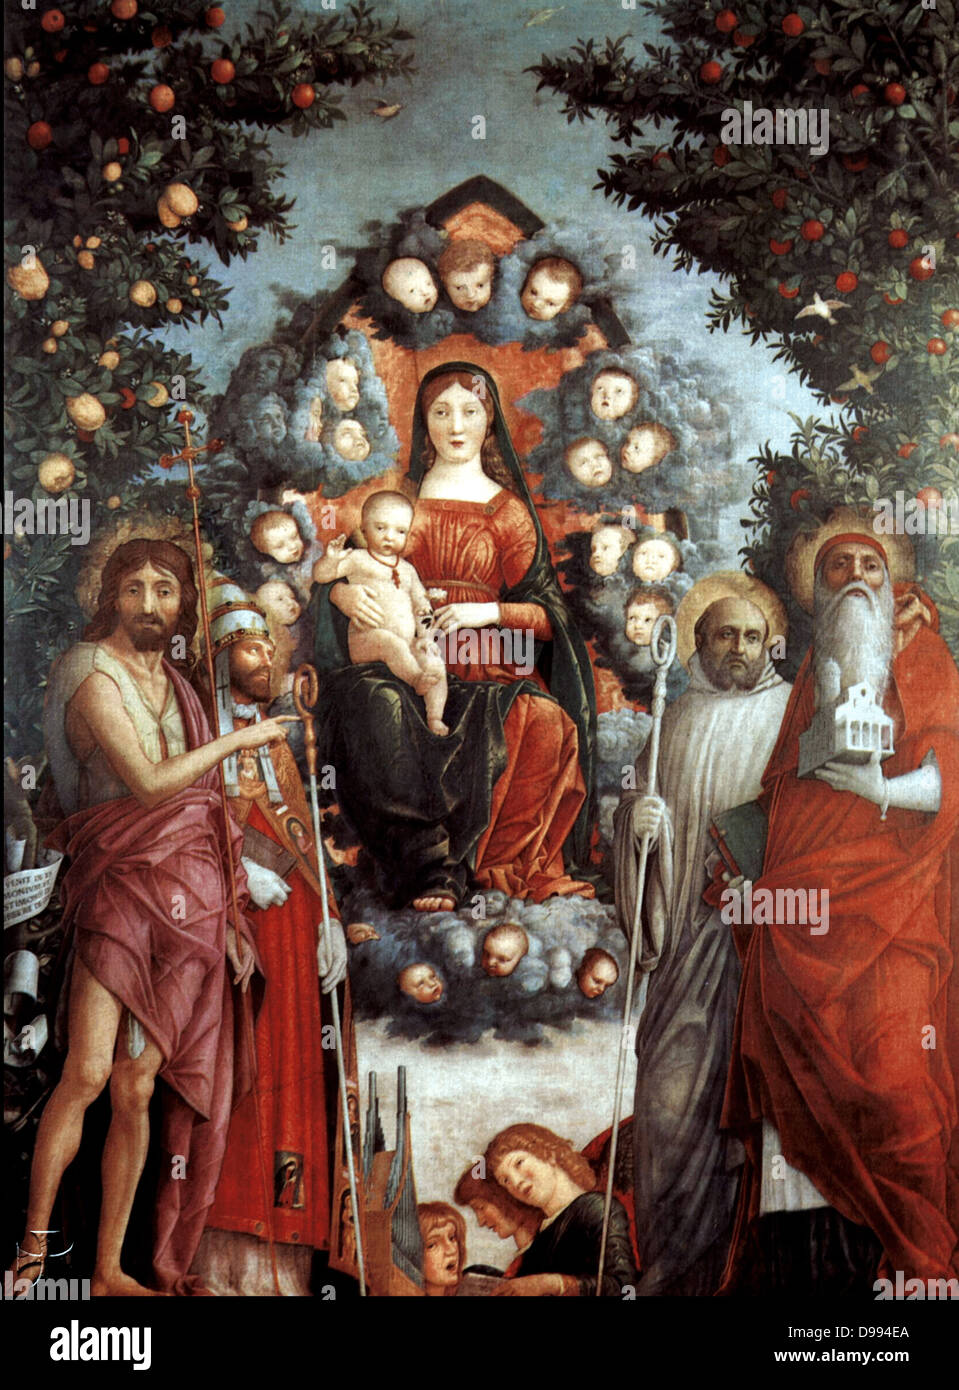 'Trivulzio Madonna' Oil on canvas,1497, Castello Sforzesco, Museo Civico d’Arte Antica, Milan, by Andrea Mantegna (c. 1431 – September 13, 1506) Italian Renaissance painter Stock Photo